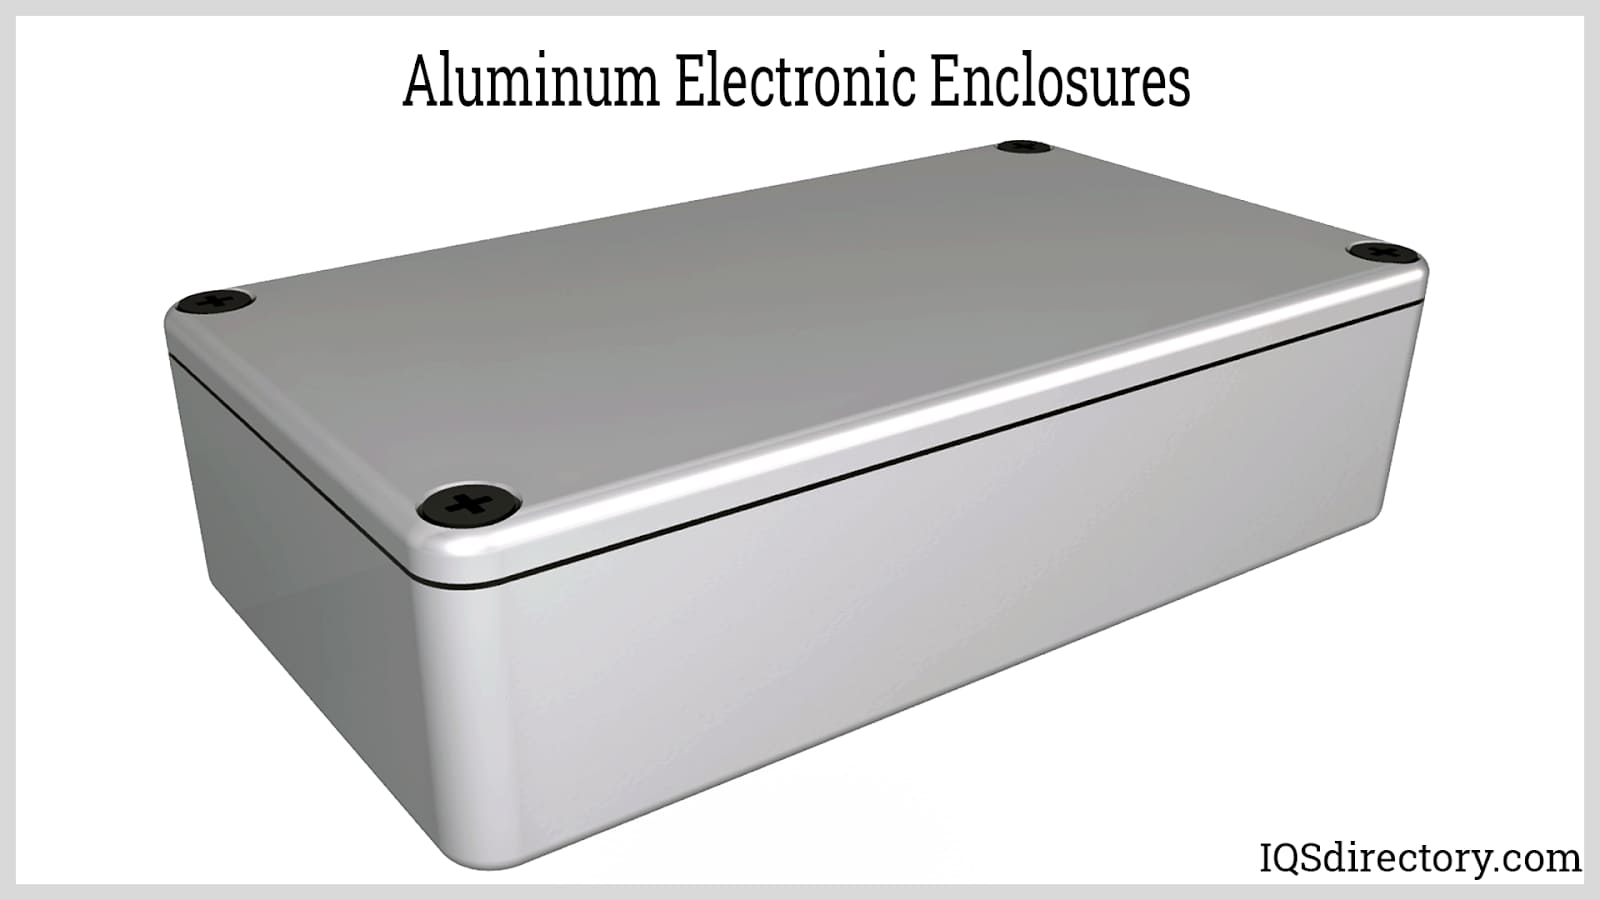 Aluminum Electronic Enclosure